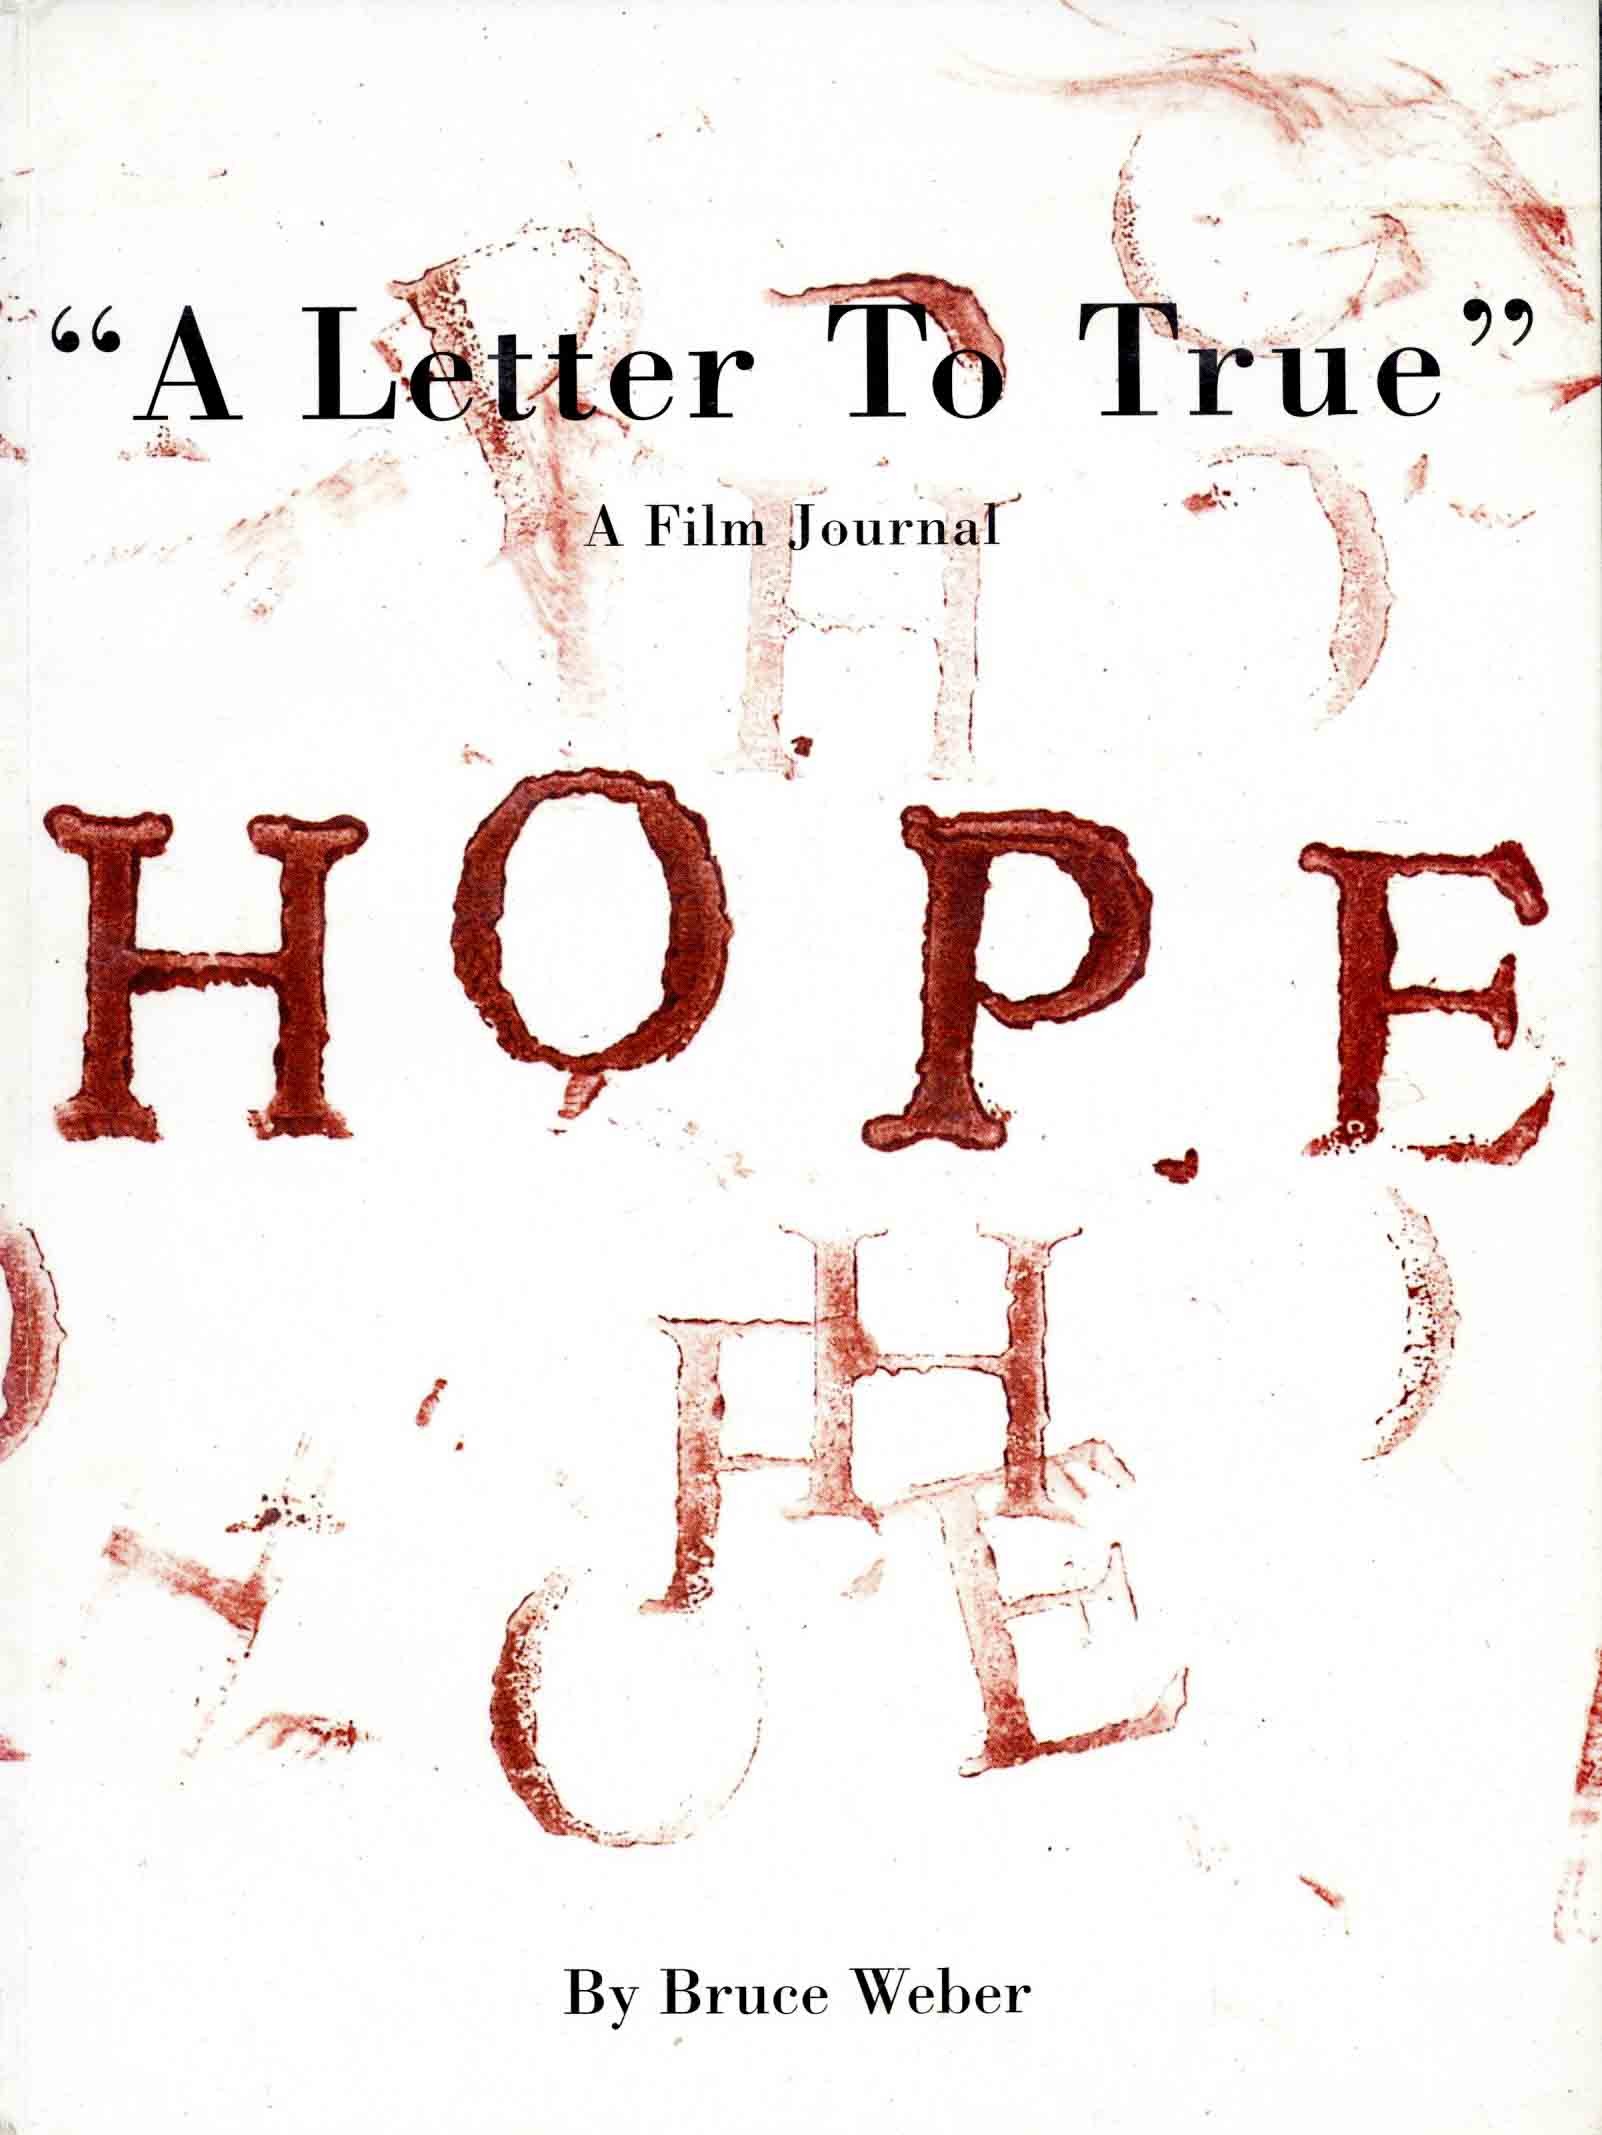 「A Letter To True A Film Journal / HOPE / Bruce Weber 」メイン画像